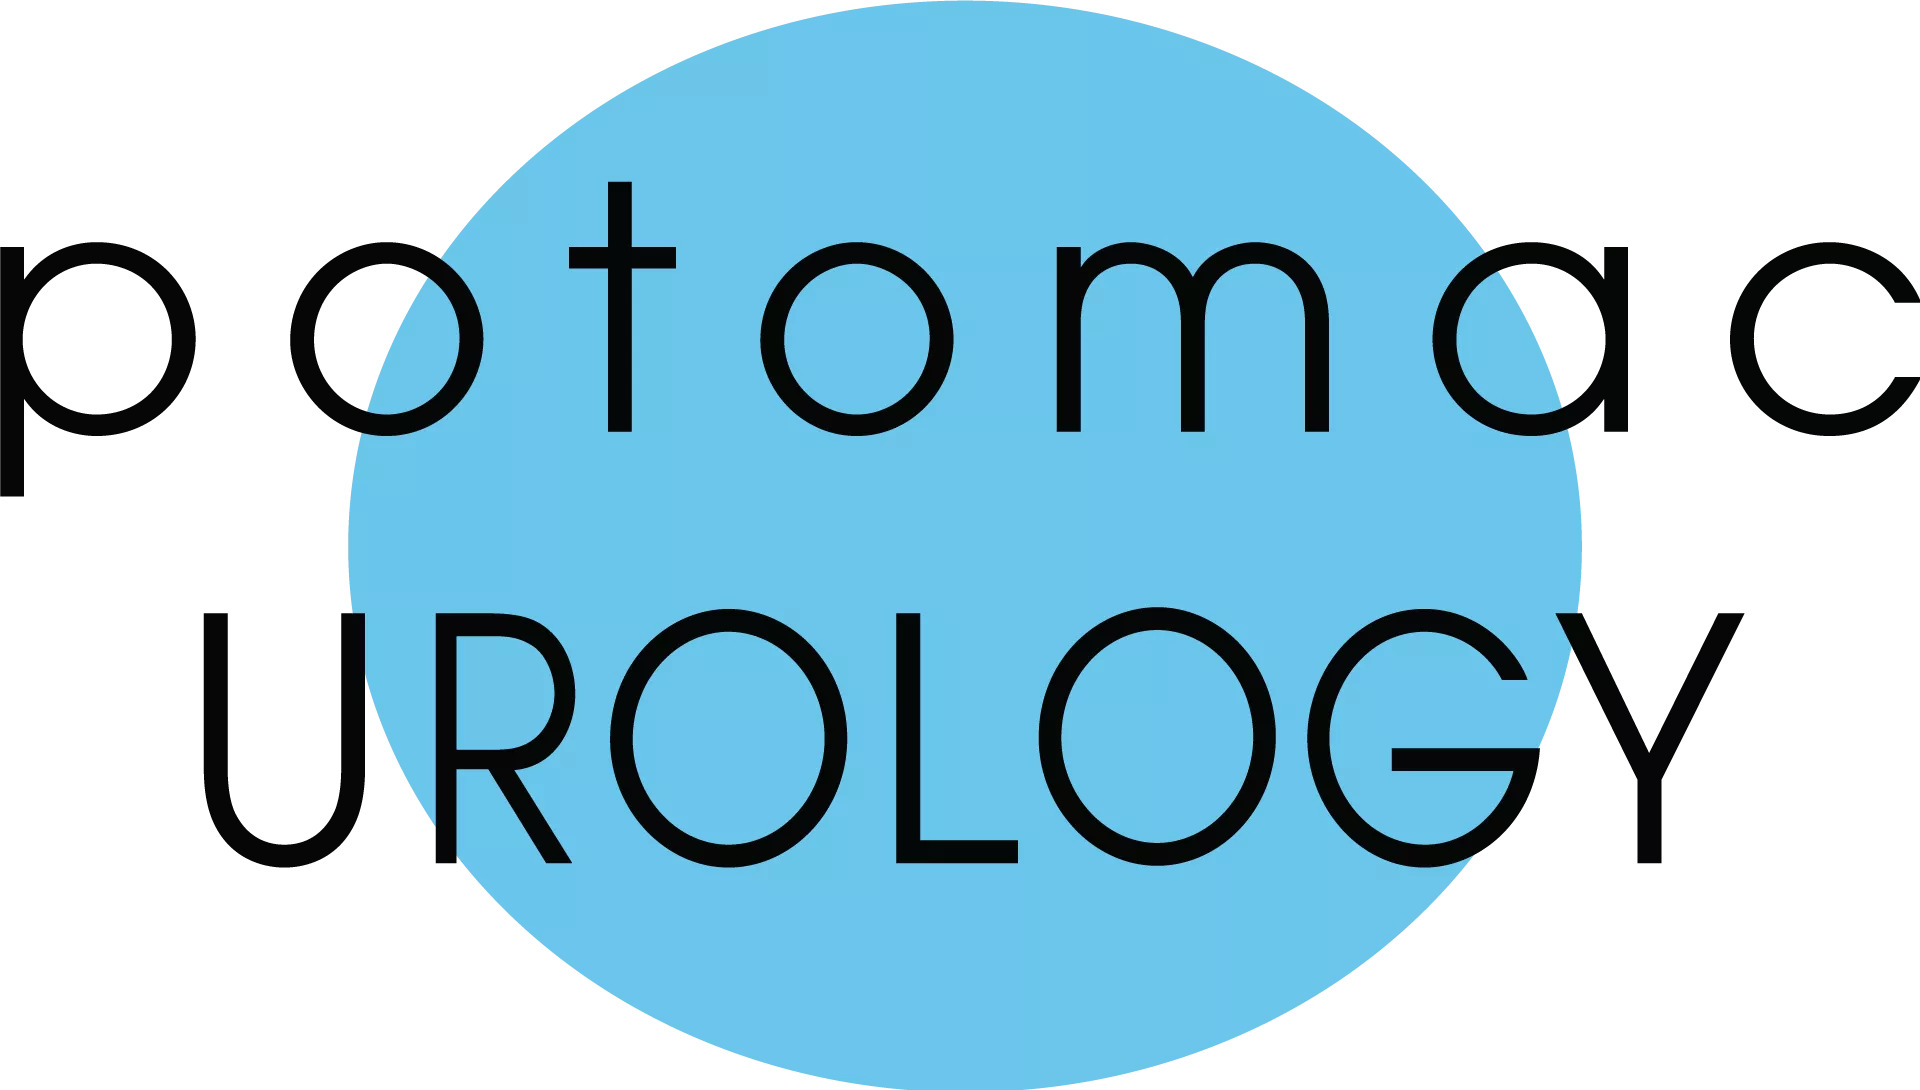 Potomac Urology logo